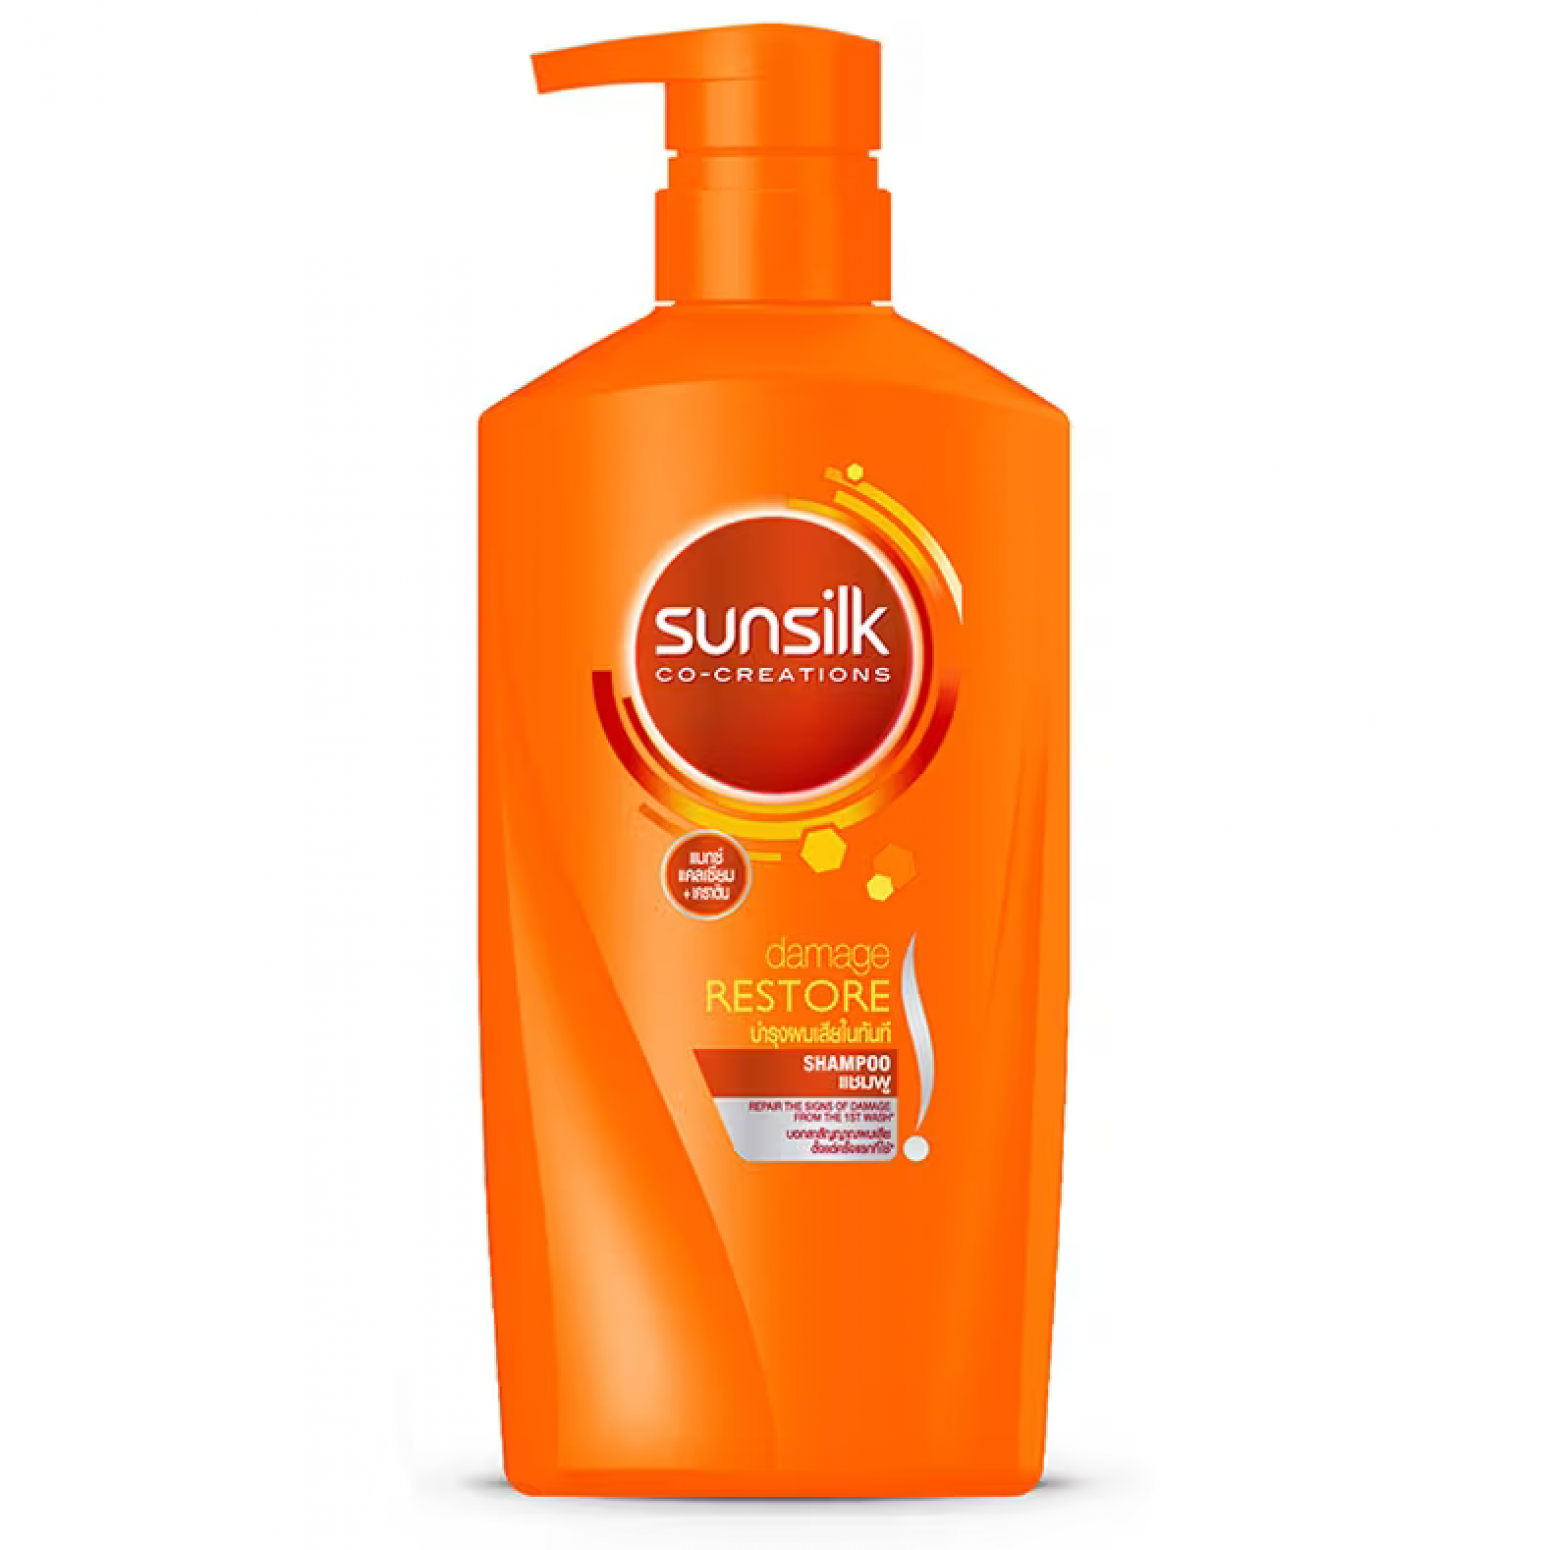 Sunsilk Damage Restore Shampoo 560ml.